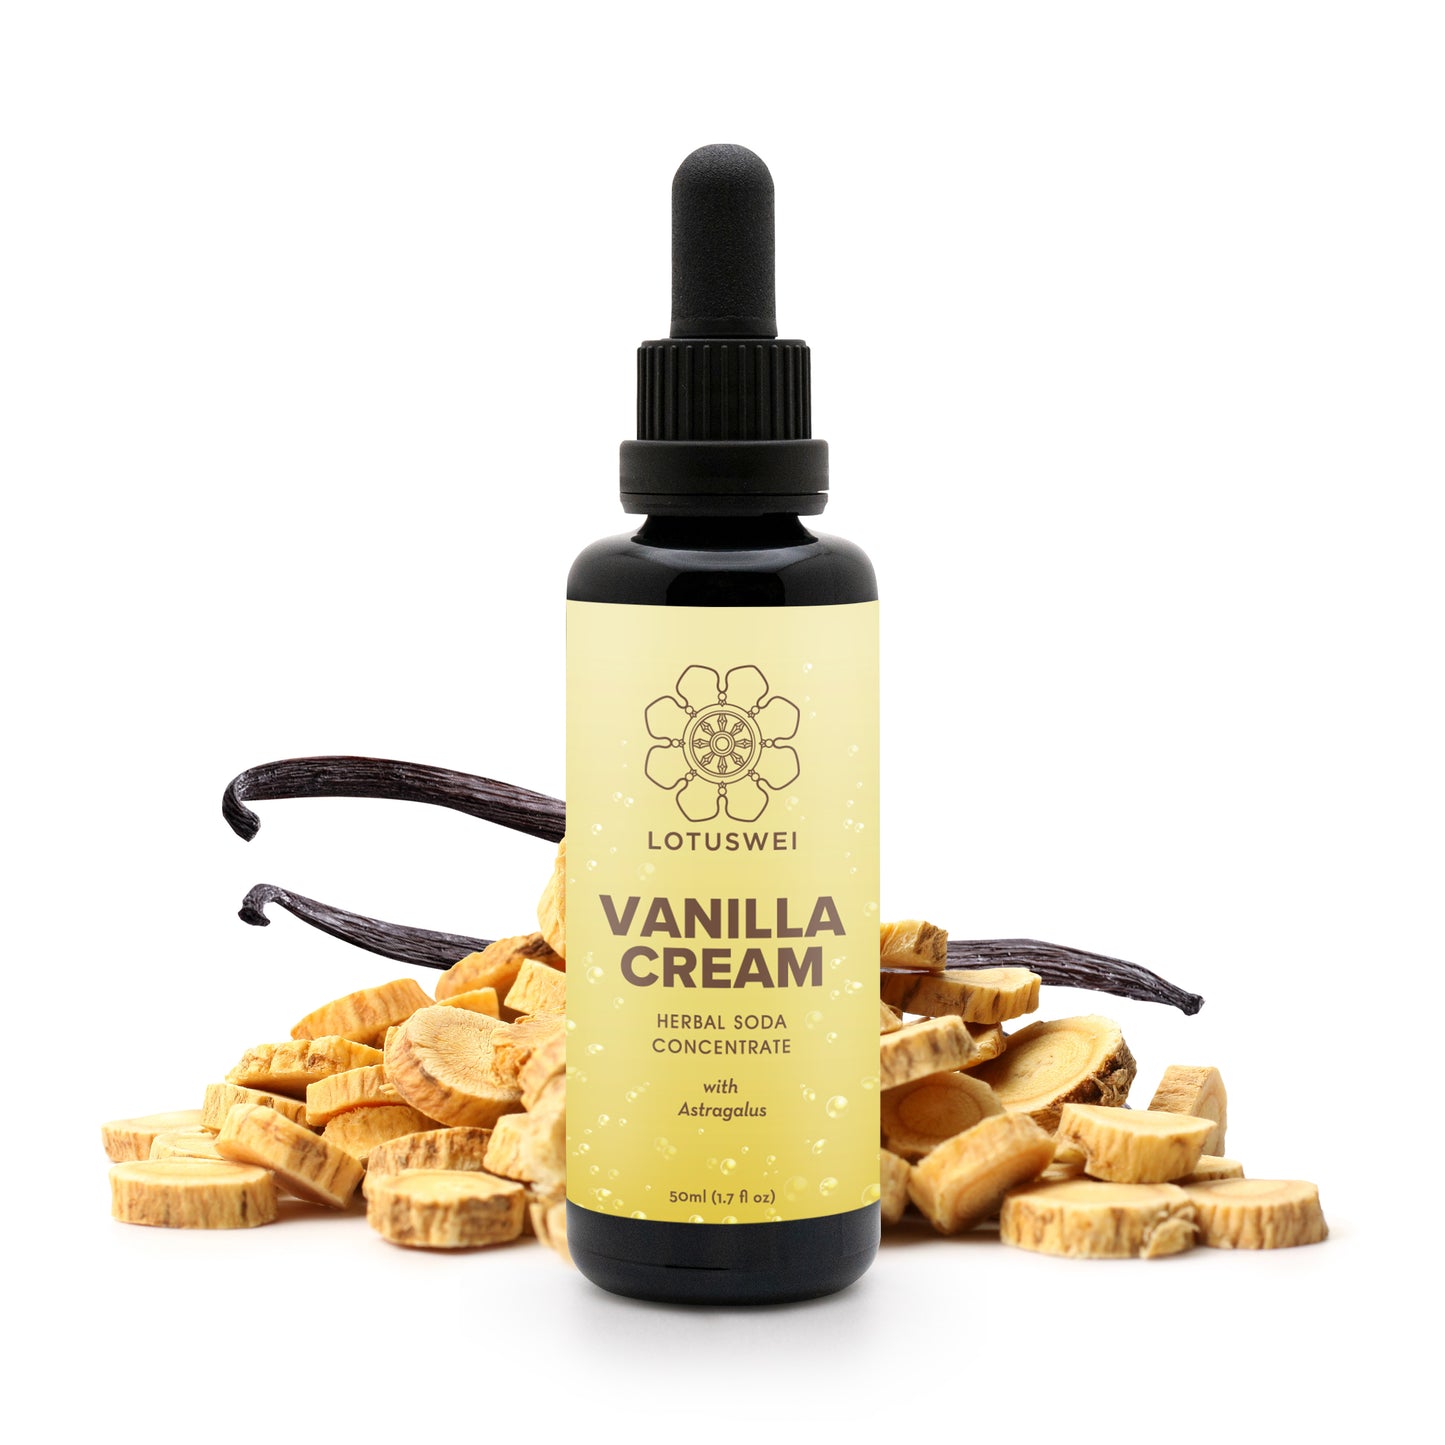 Vanilla cream herbal soda concentrate 50ml